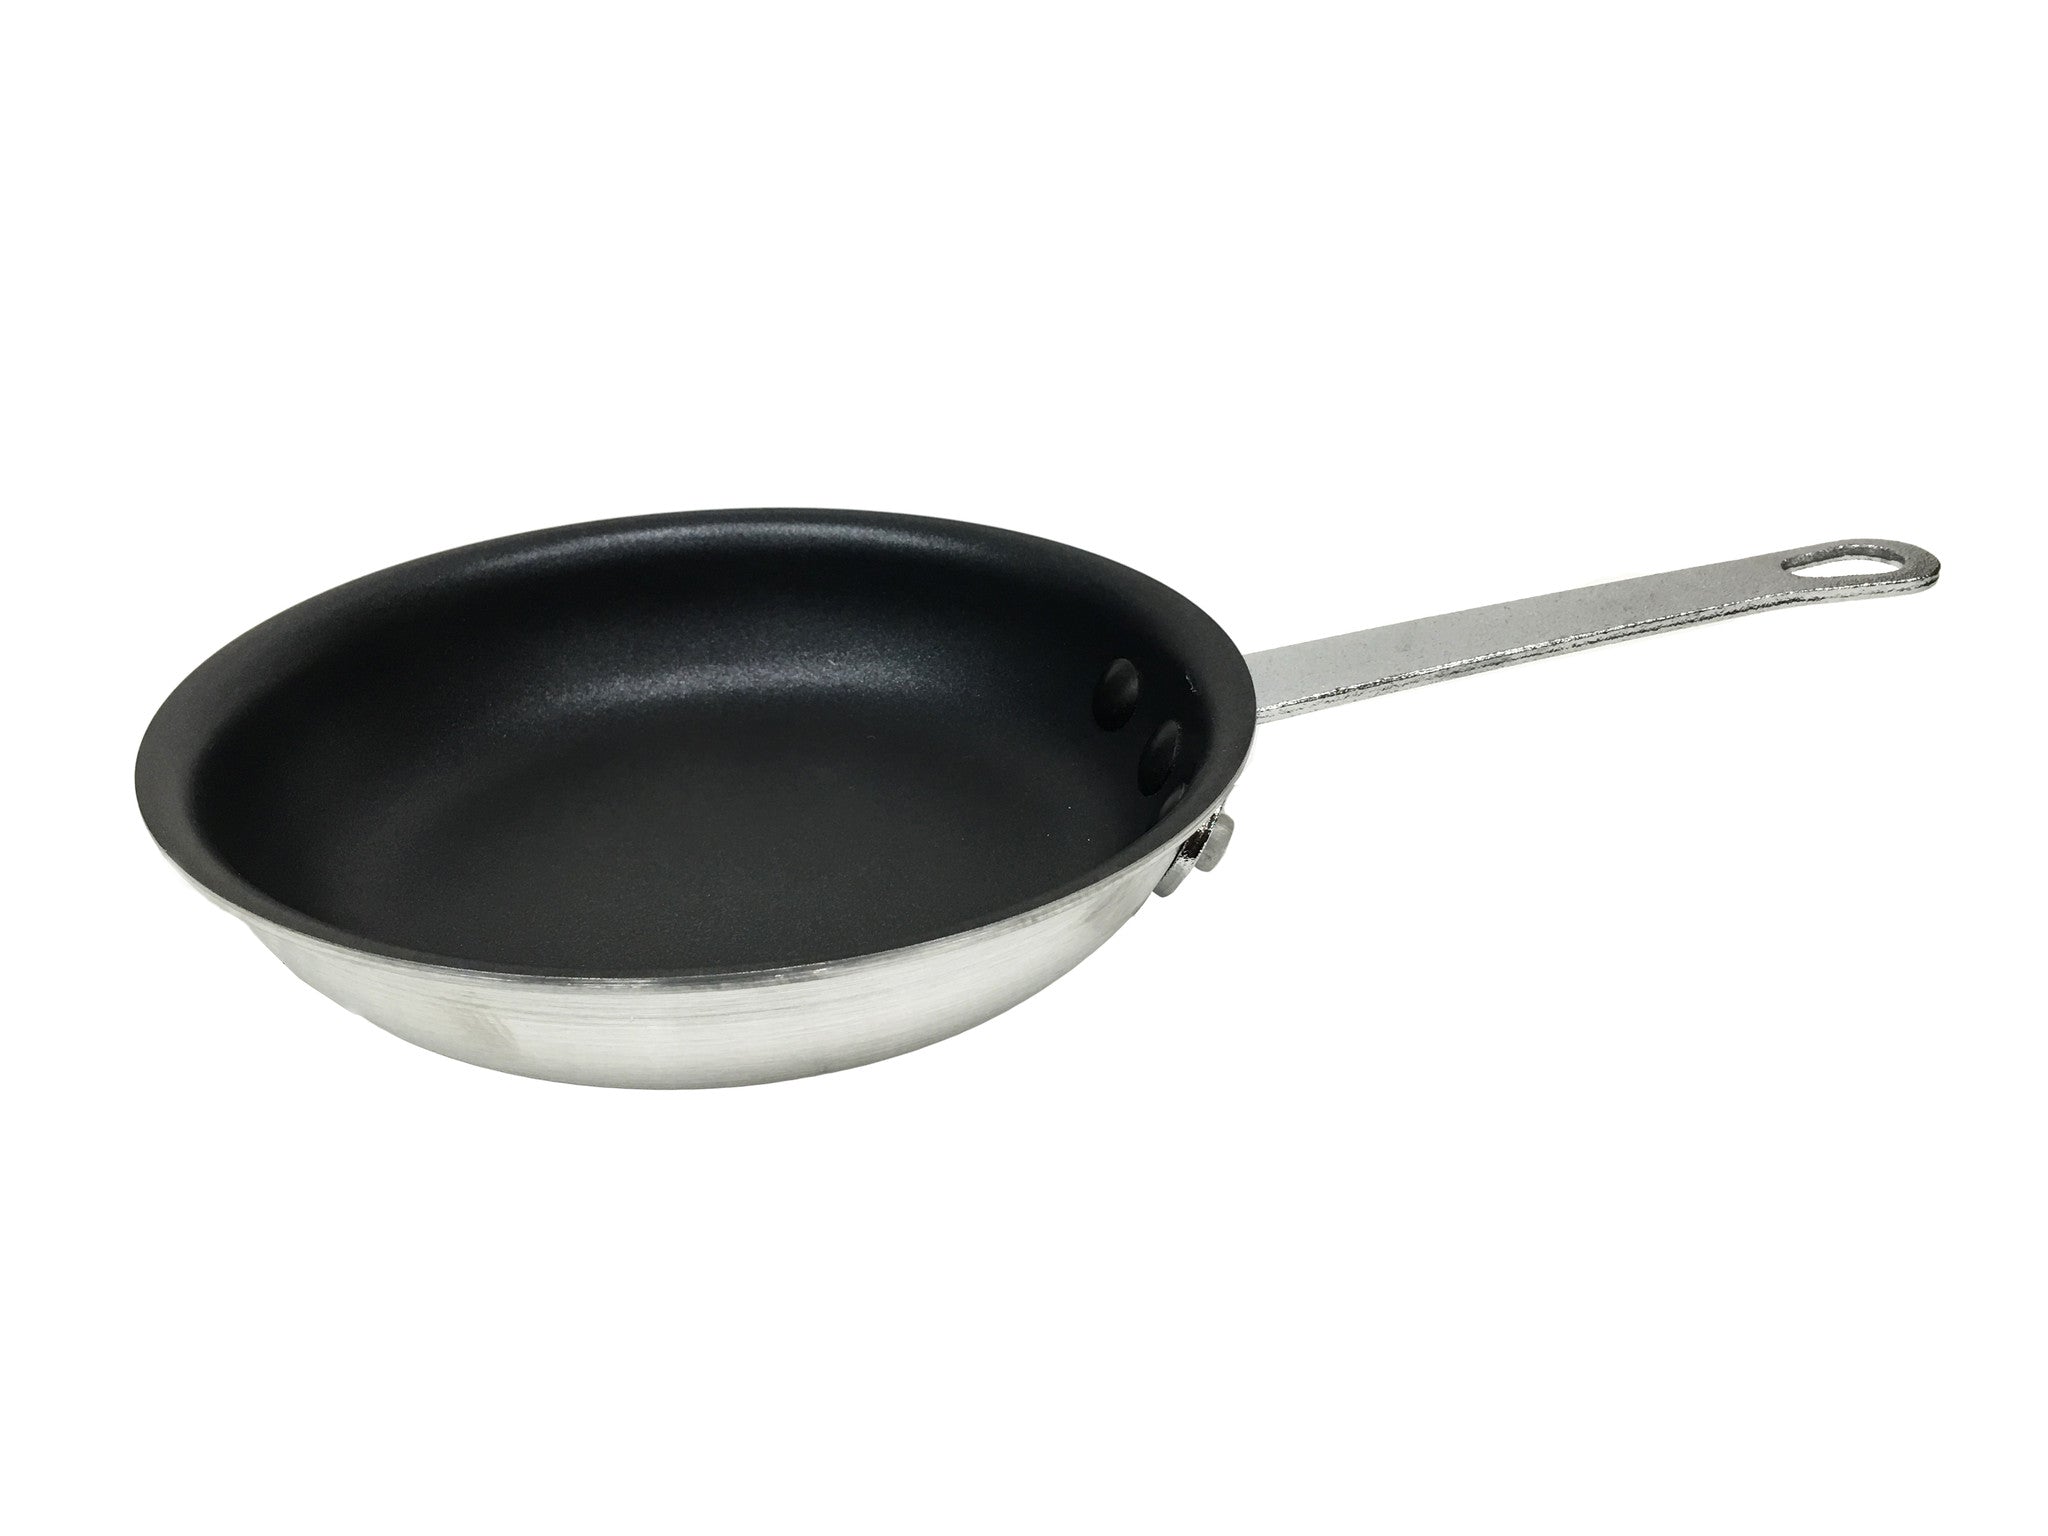 Aluminum Alloy Commercial Fry Pan, Quantum 2 Coating Options, Cookware - eKitchenary